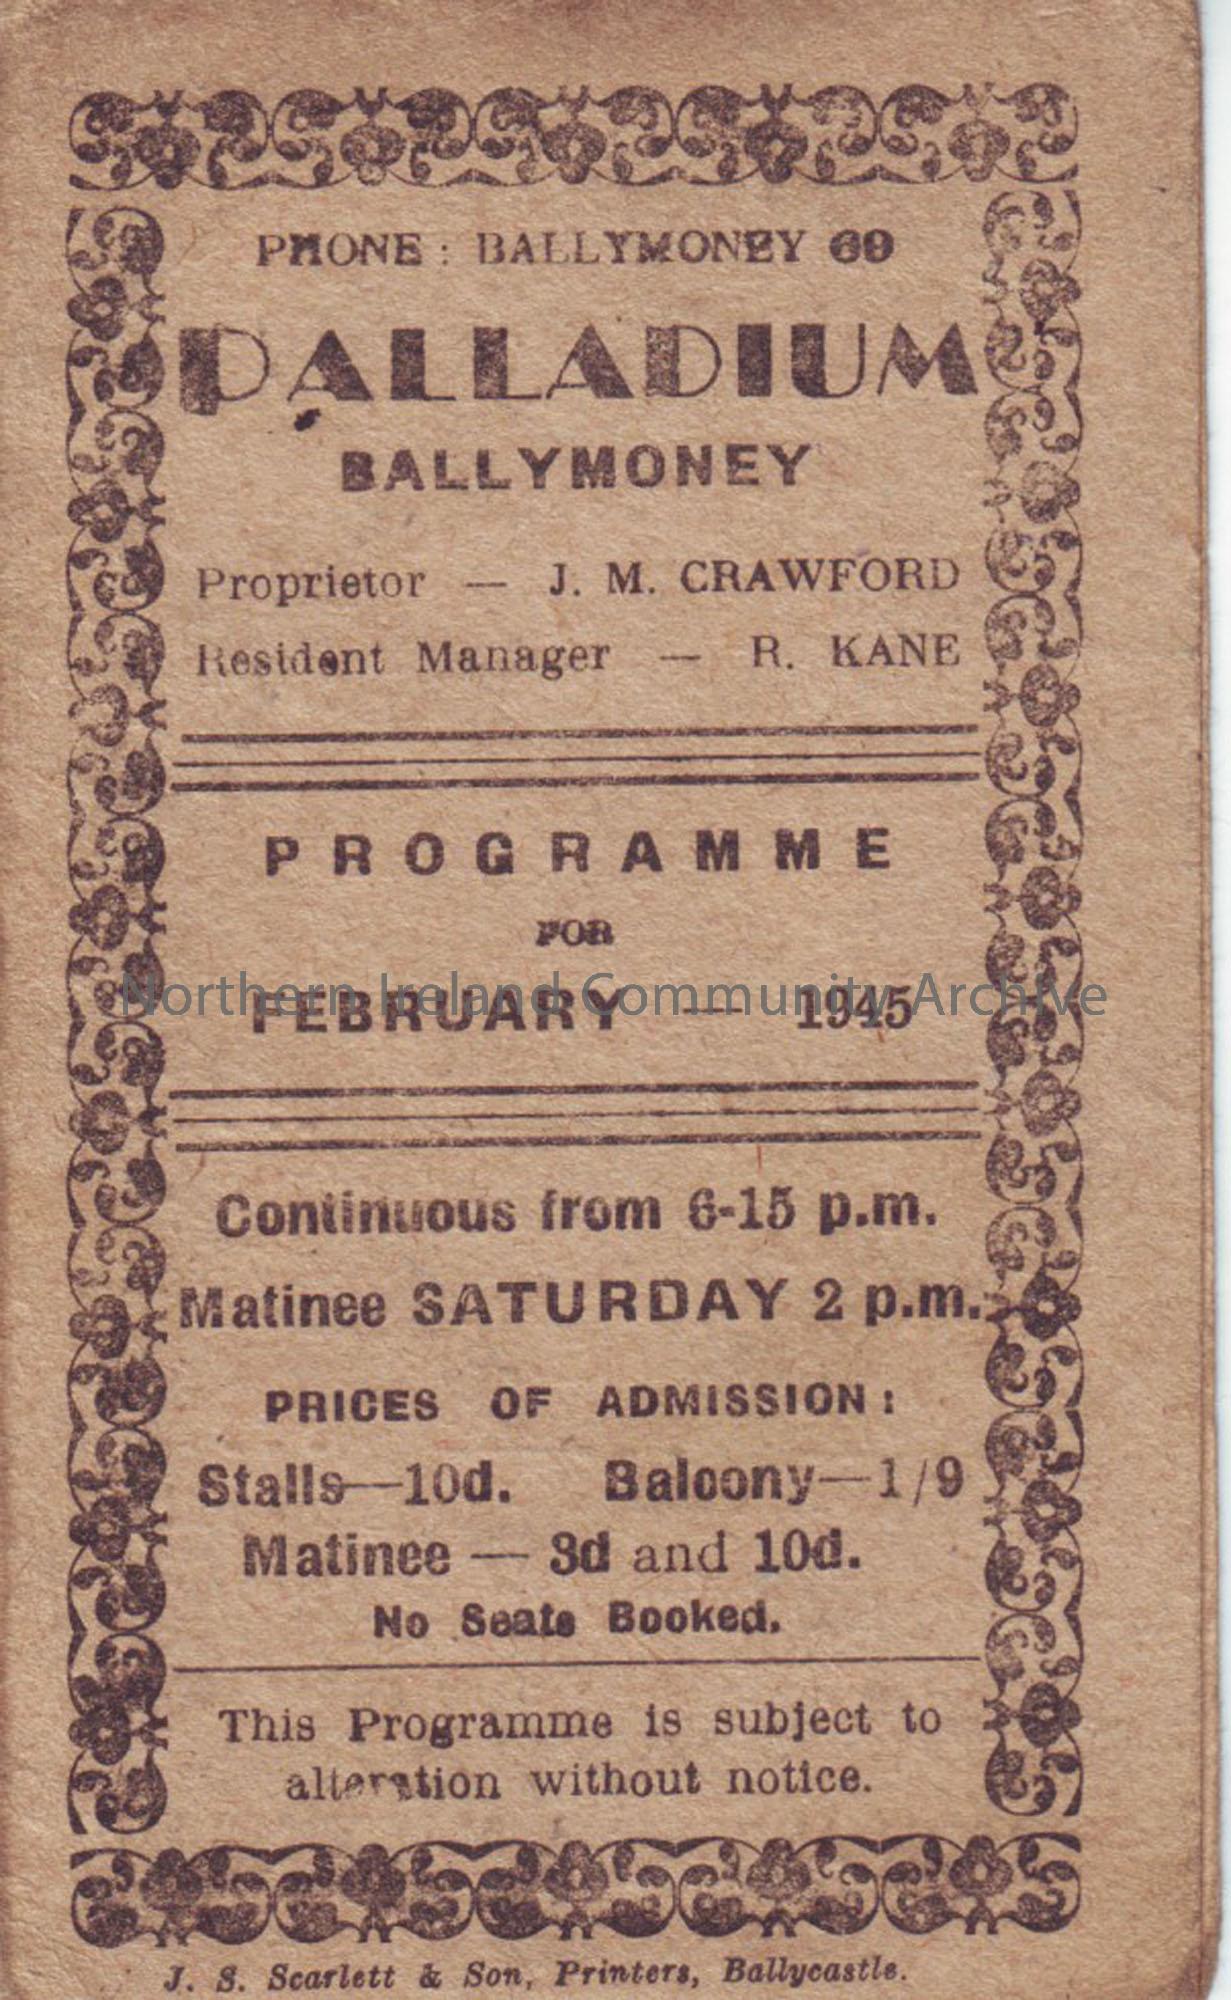 cream programme for Ballymoney Palladium cinema- February 1945